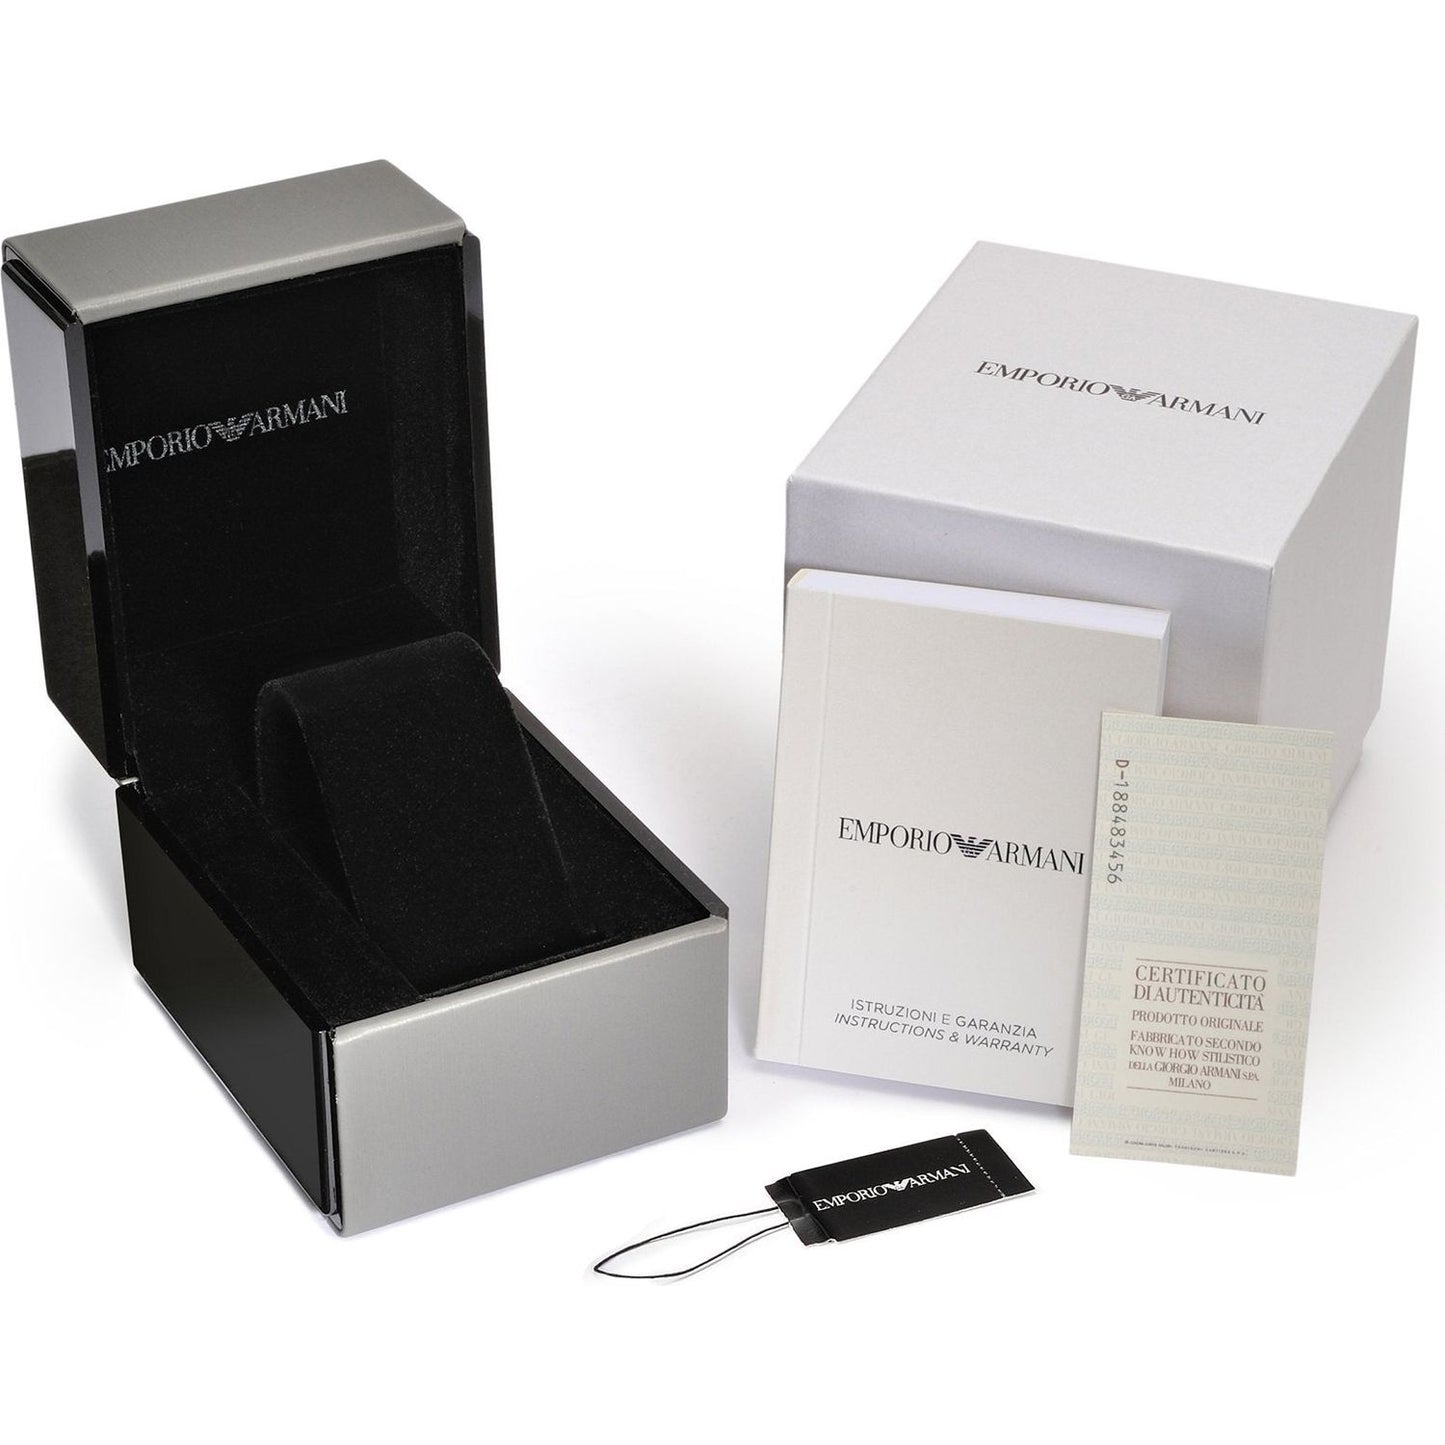 EMPORIO ARMANIEMPORIO ARMANI Mod. KAPPA Special Pack + EarringsMcRichard Designer Brands£265.00